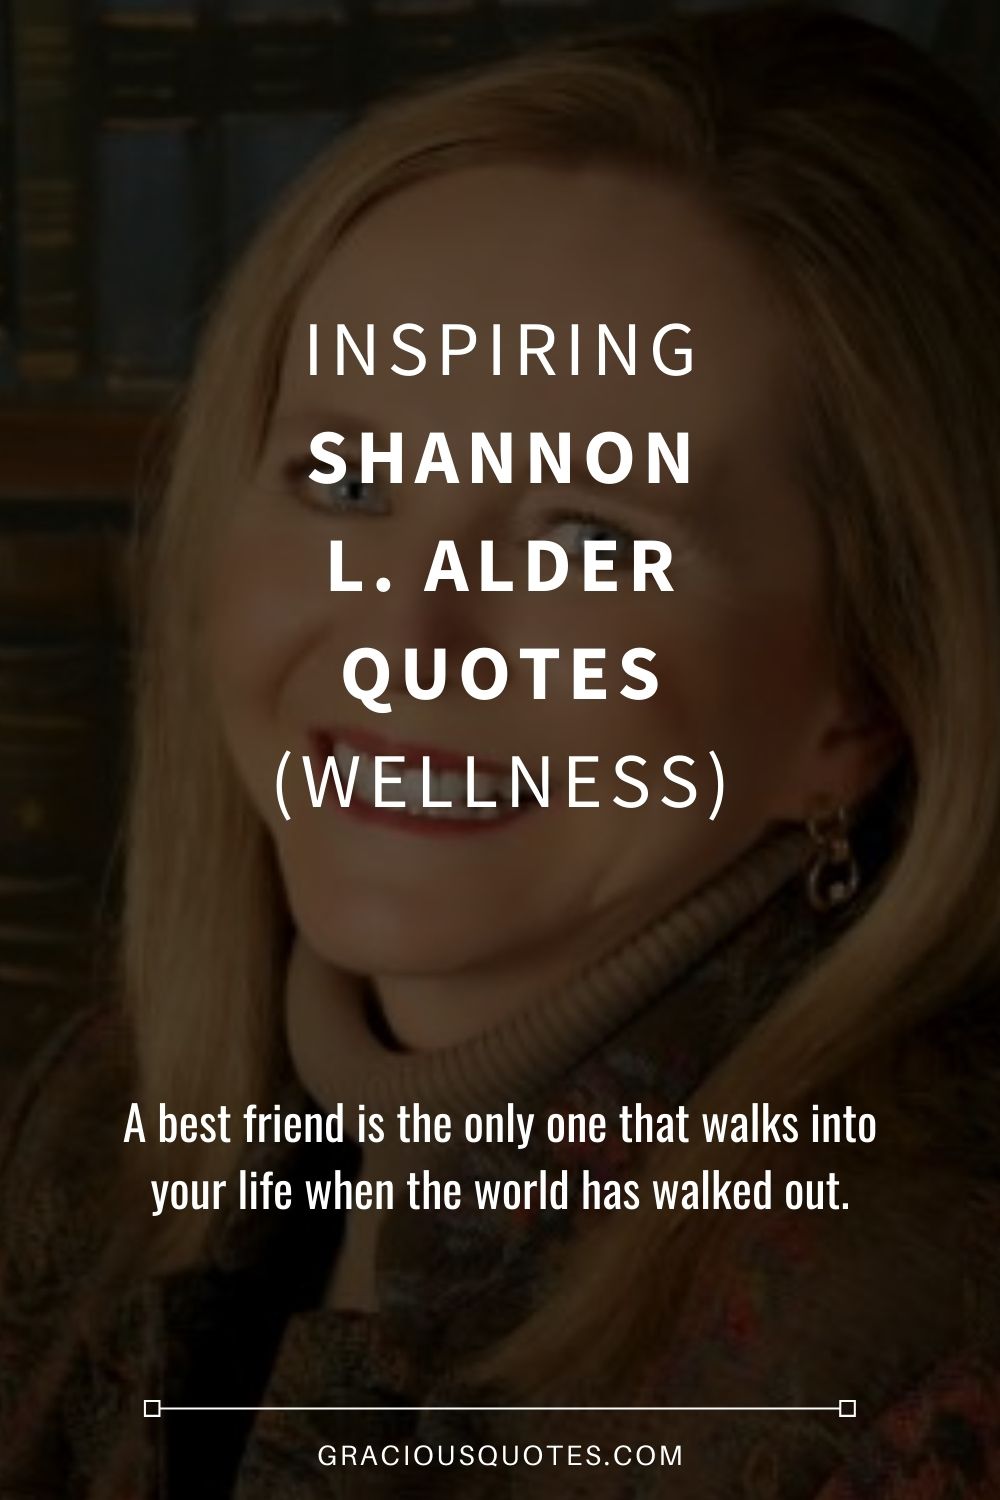 Inspiring Shannon L. Alder Quotes (WELLNESS) - Gracious Quotes